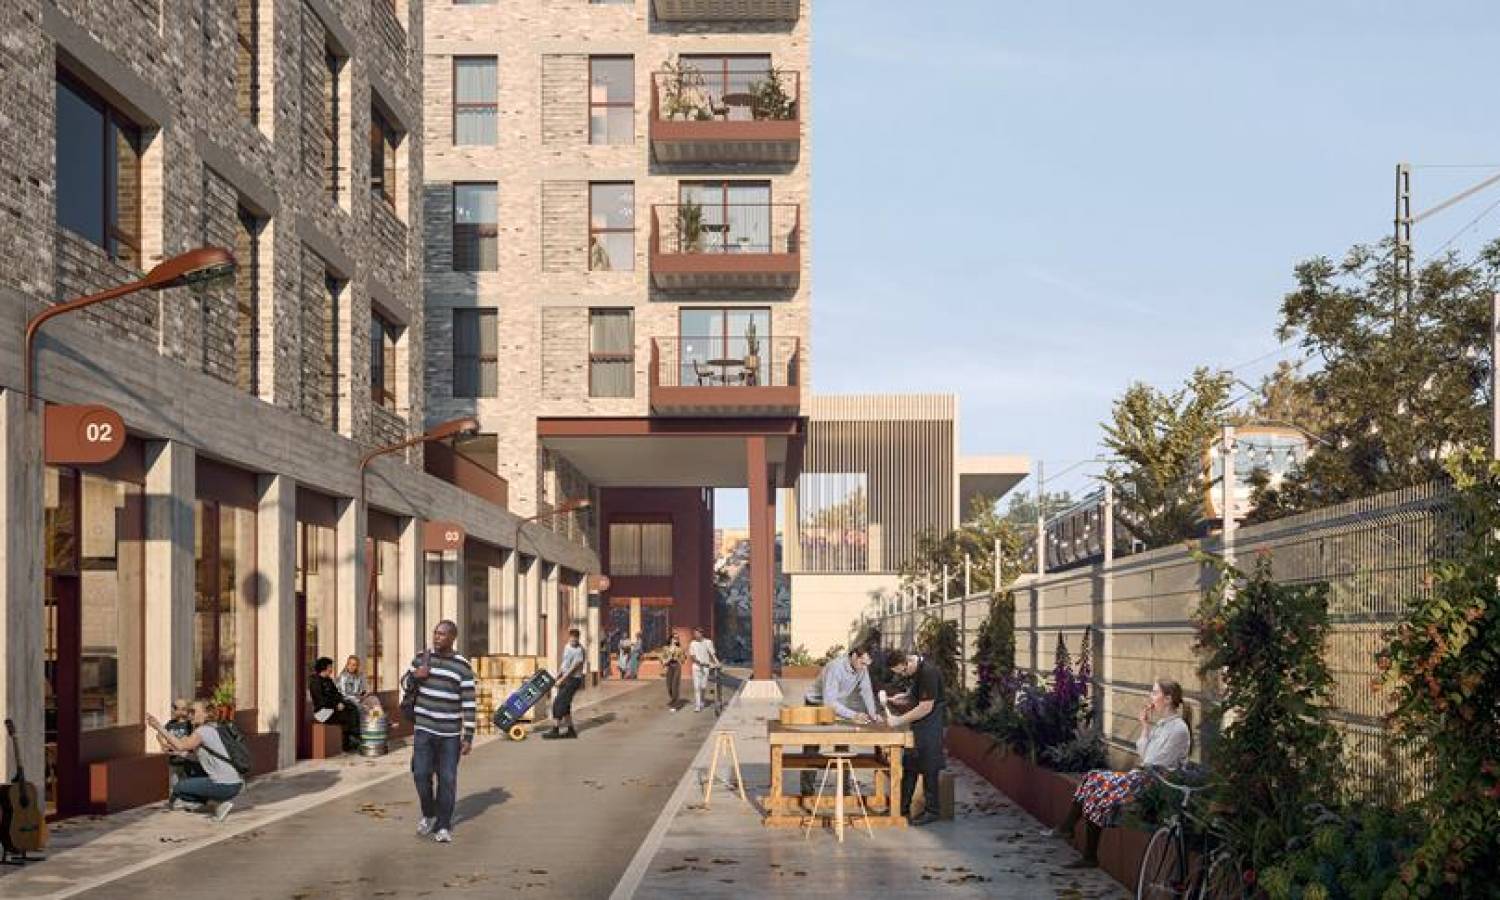 Notting Hill Genesis prepares a new development scheme in Hackney Wick